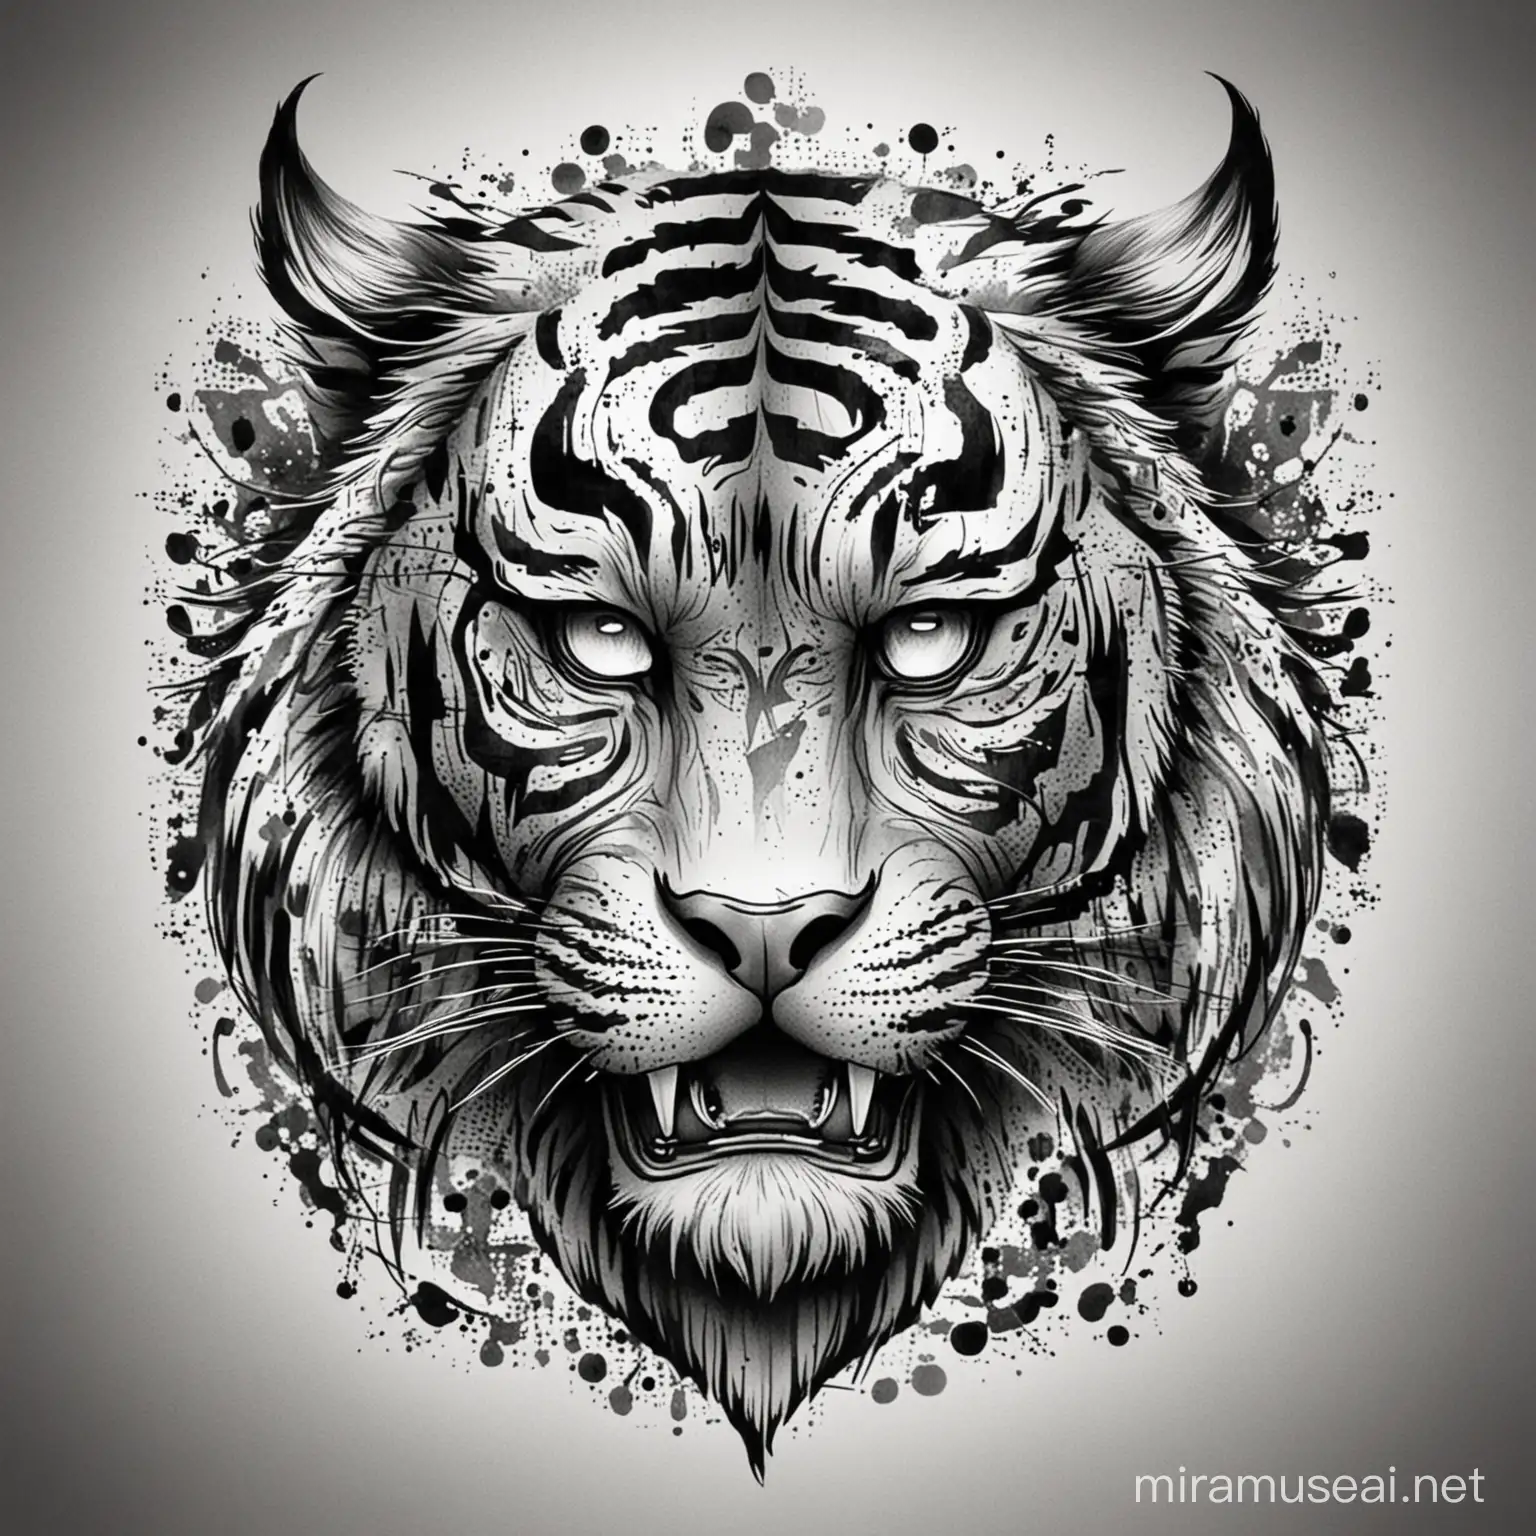 Tiger head tattoo, black and white, comics style
